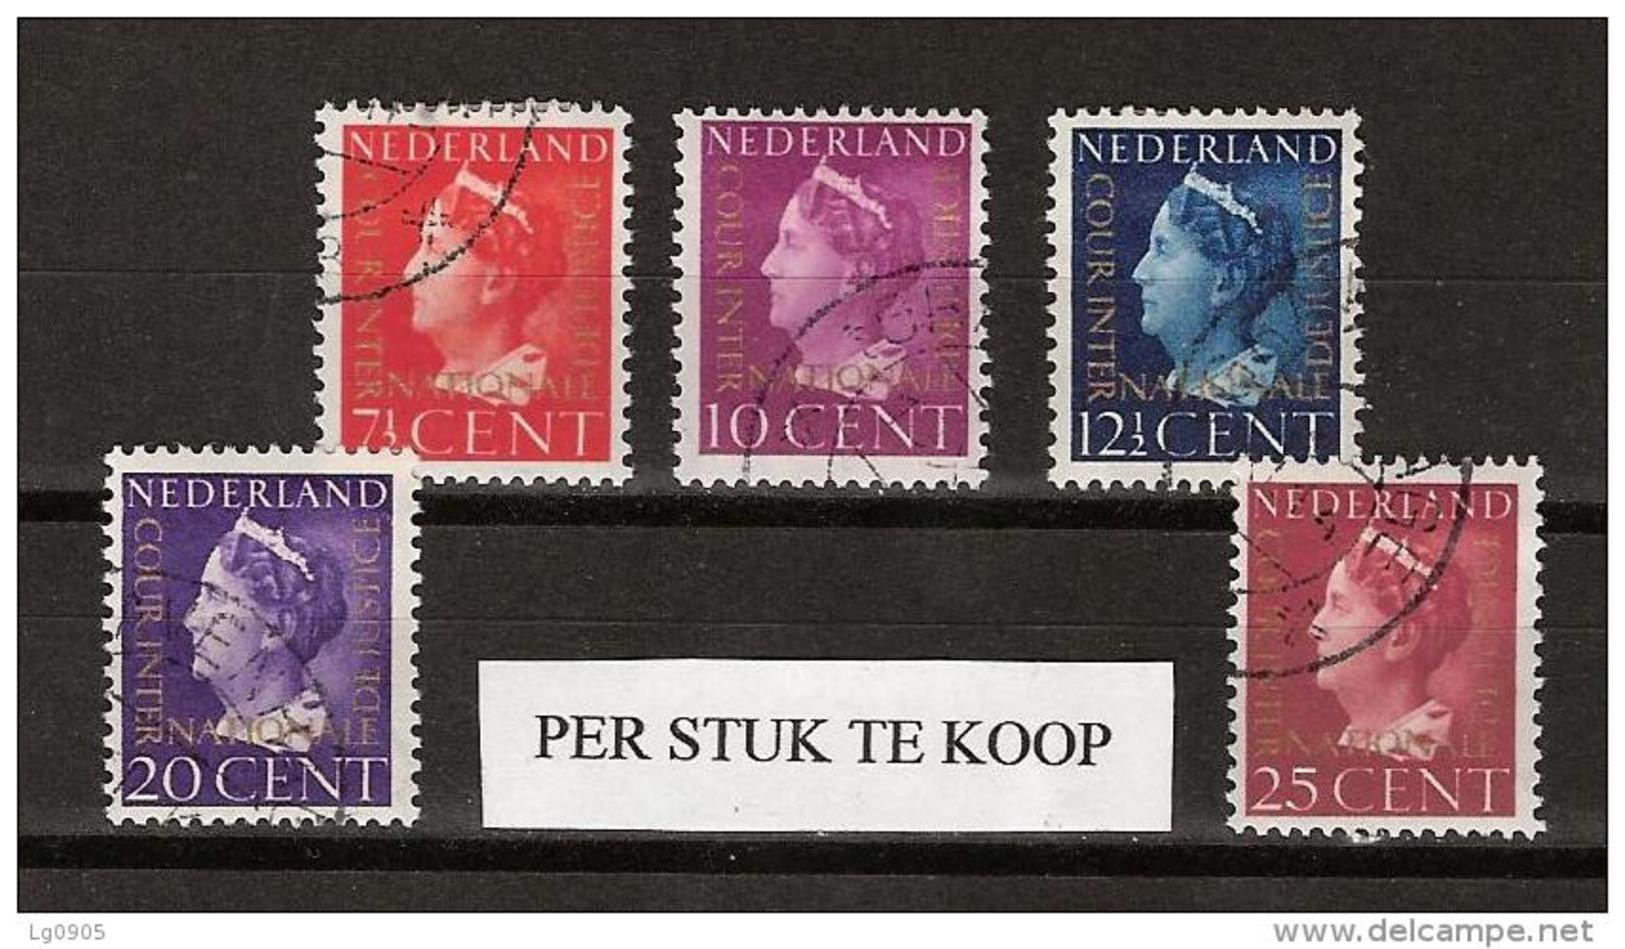 NVPH Nederland Netherlands Pays Bas Niederlande Holanda 20-24 Used Dienst Zegel Service Stamp Timbre Cour Sello Oficio - Dienstzegels